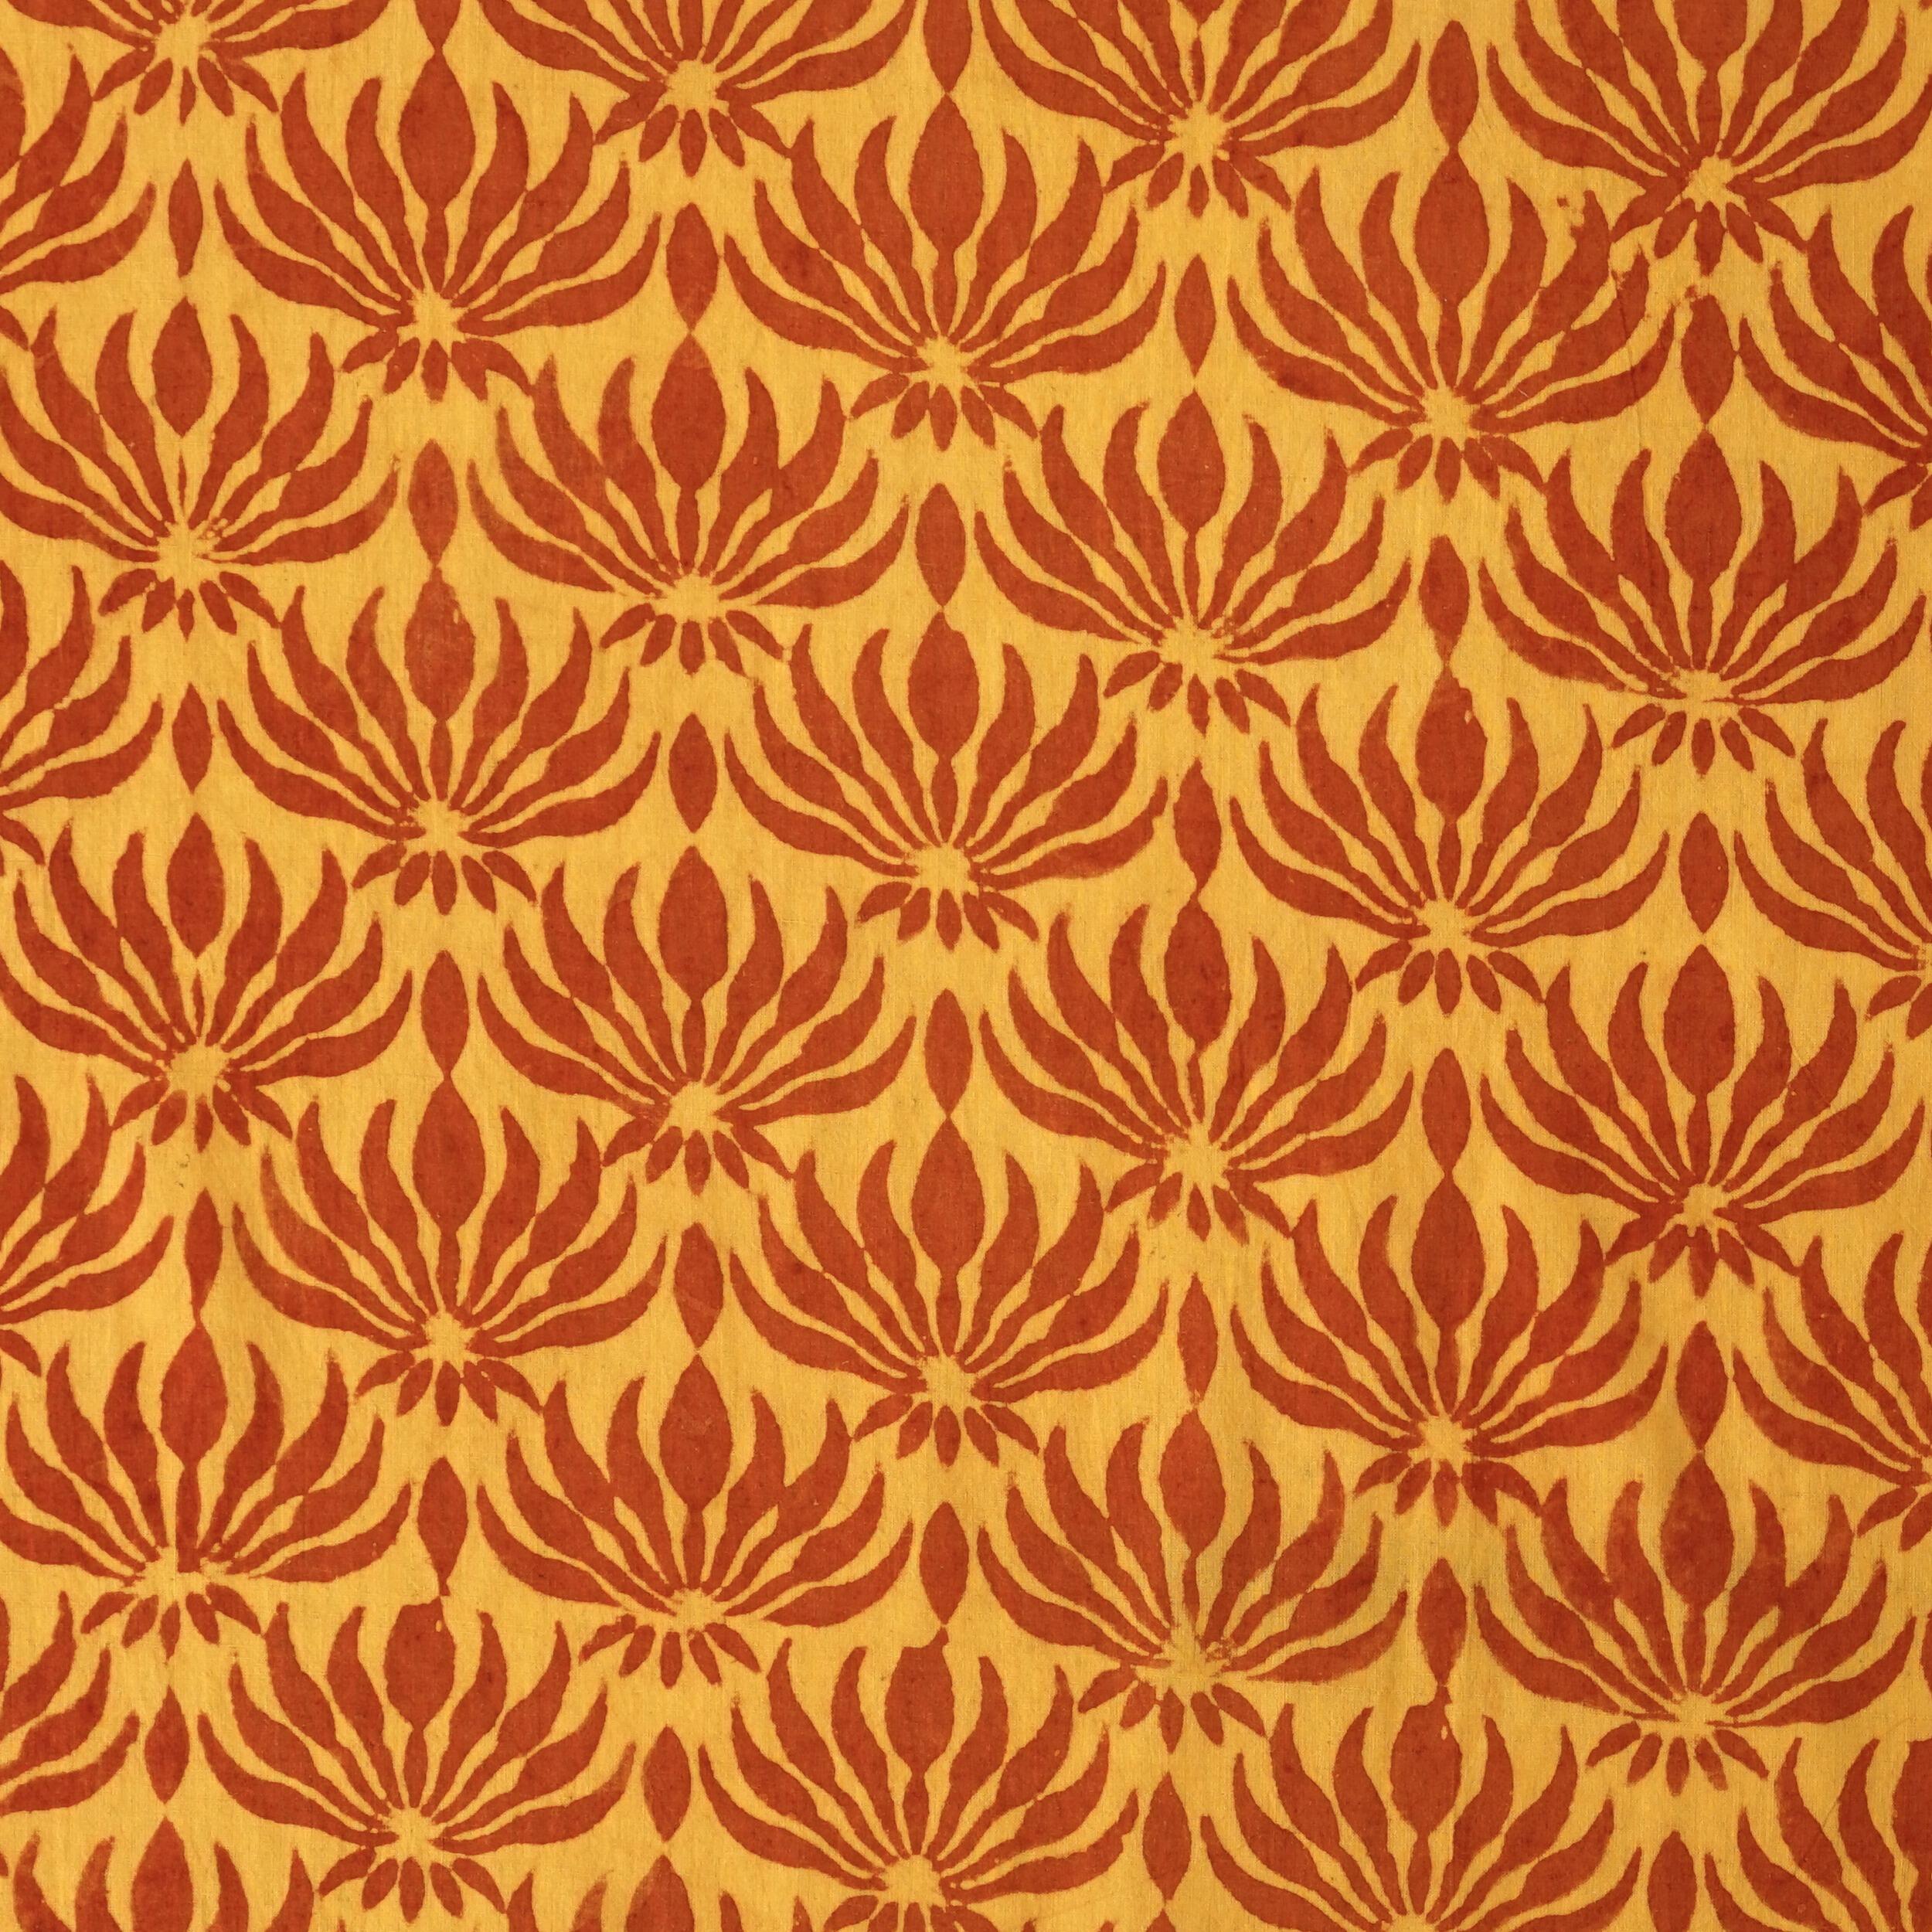 3 - AHM01 - 100% Block-Printed Cotton Fabric from India - Ajrak - Alizarin Maroon Lotus Flower, Turmeric Yellow Spray Print - Flat